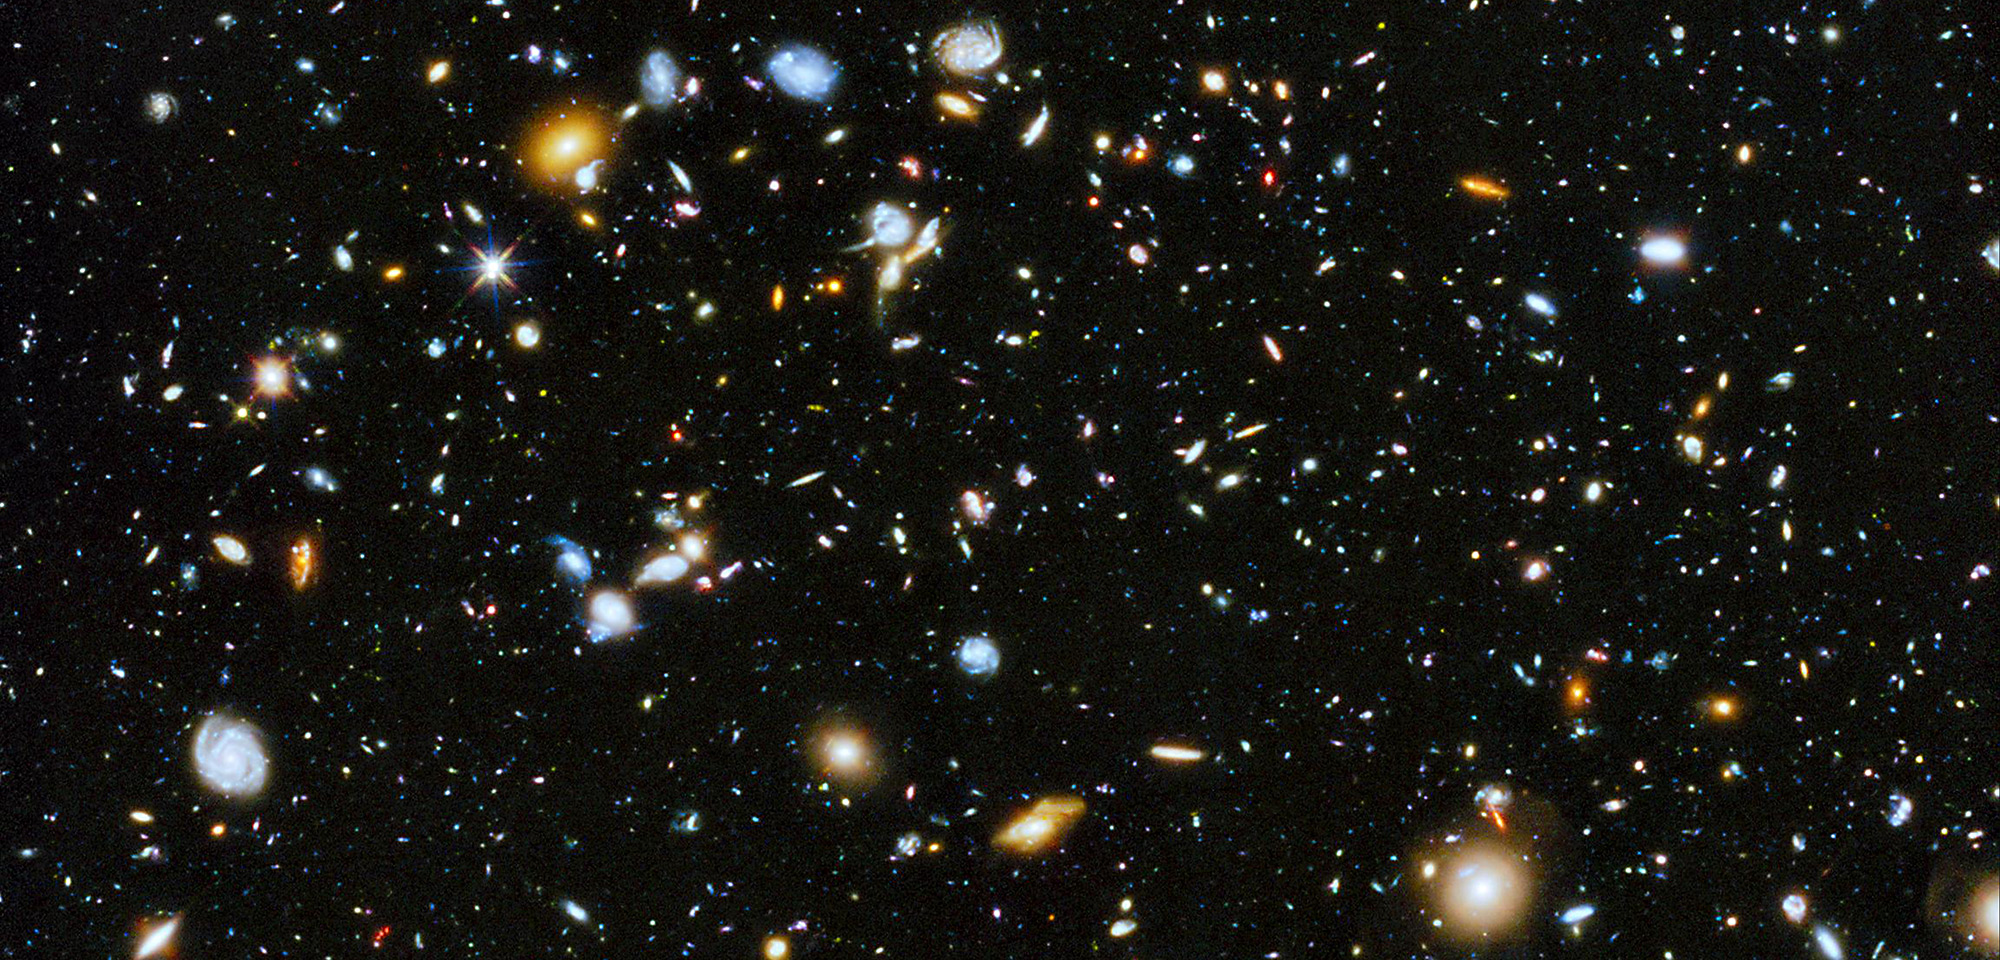 Hubble ultra-deep field shows around 10,000 galaxies.